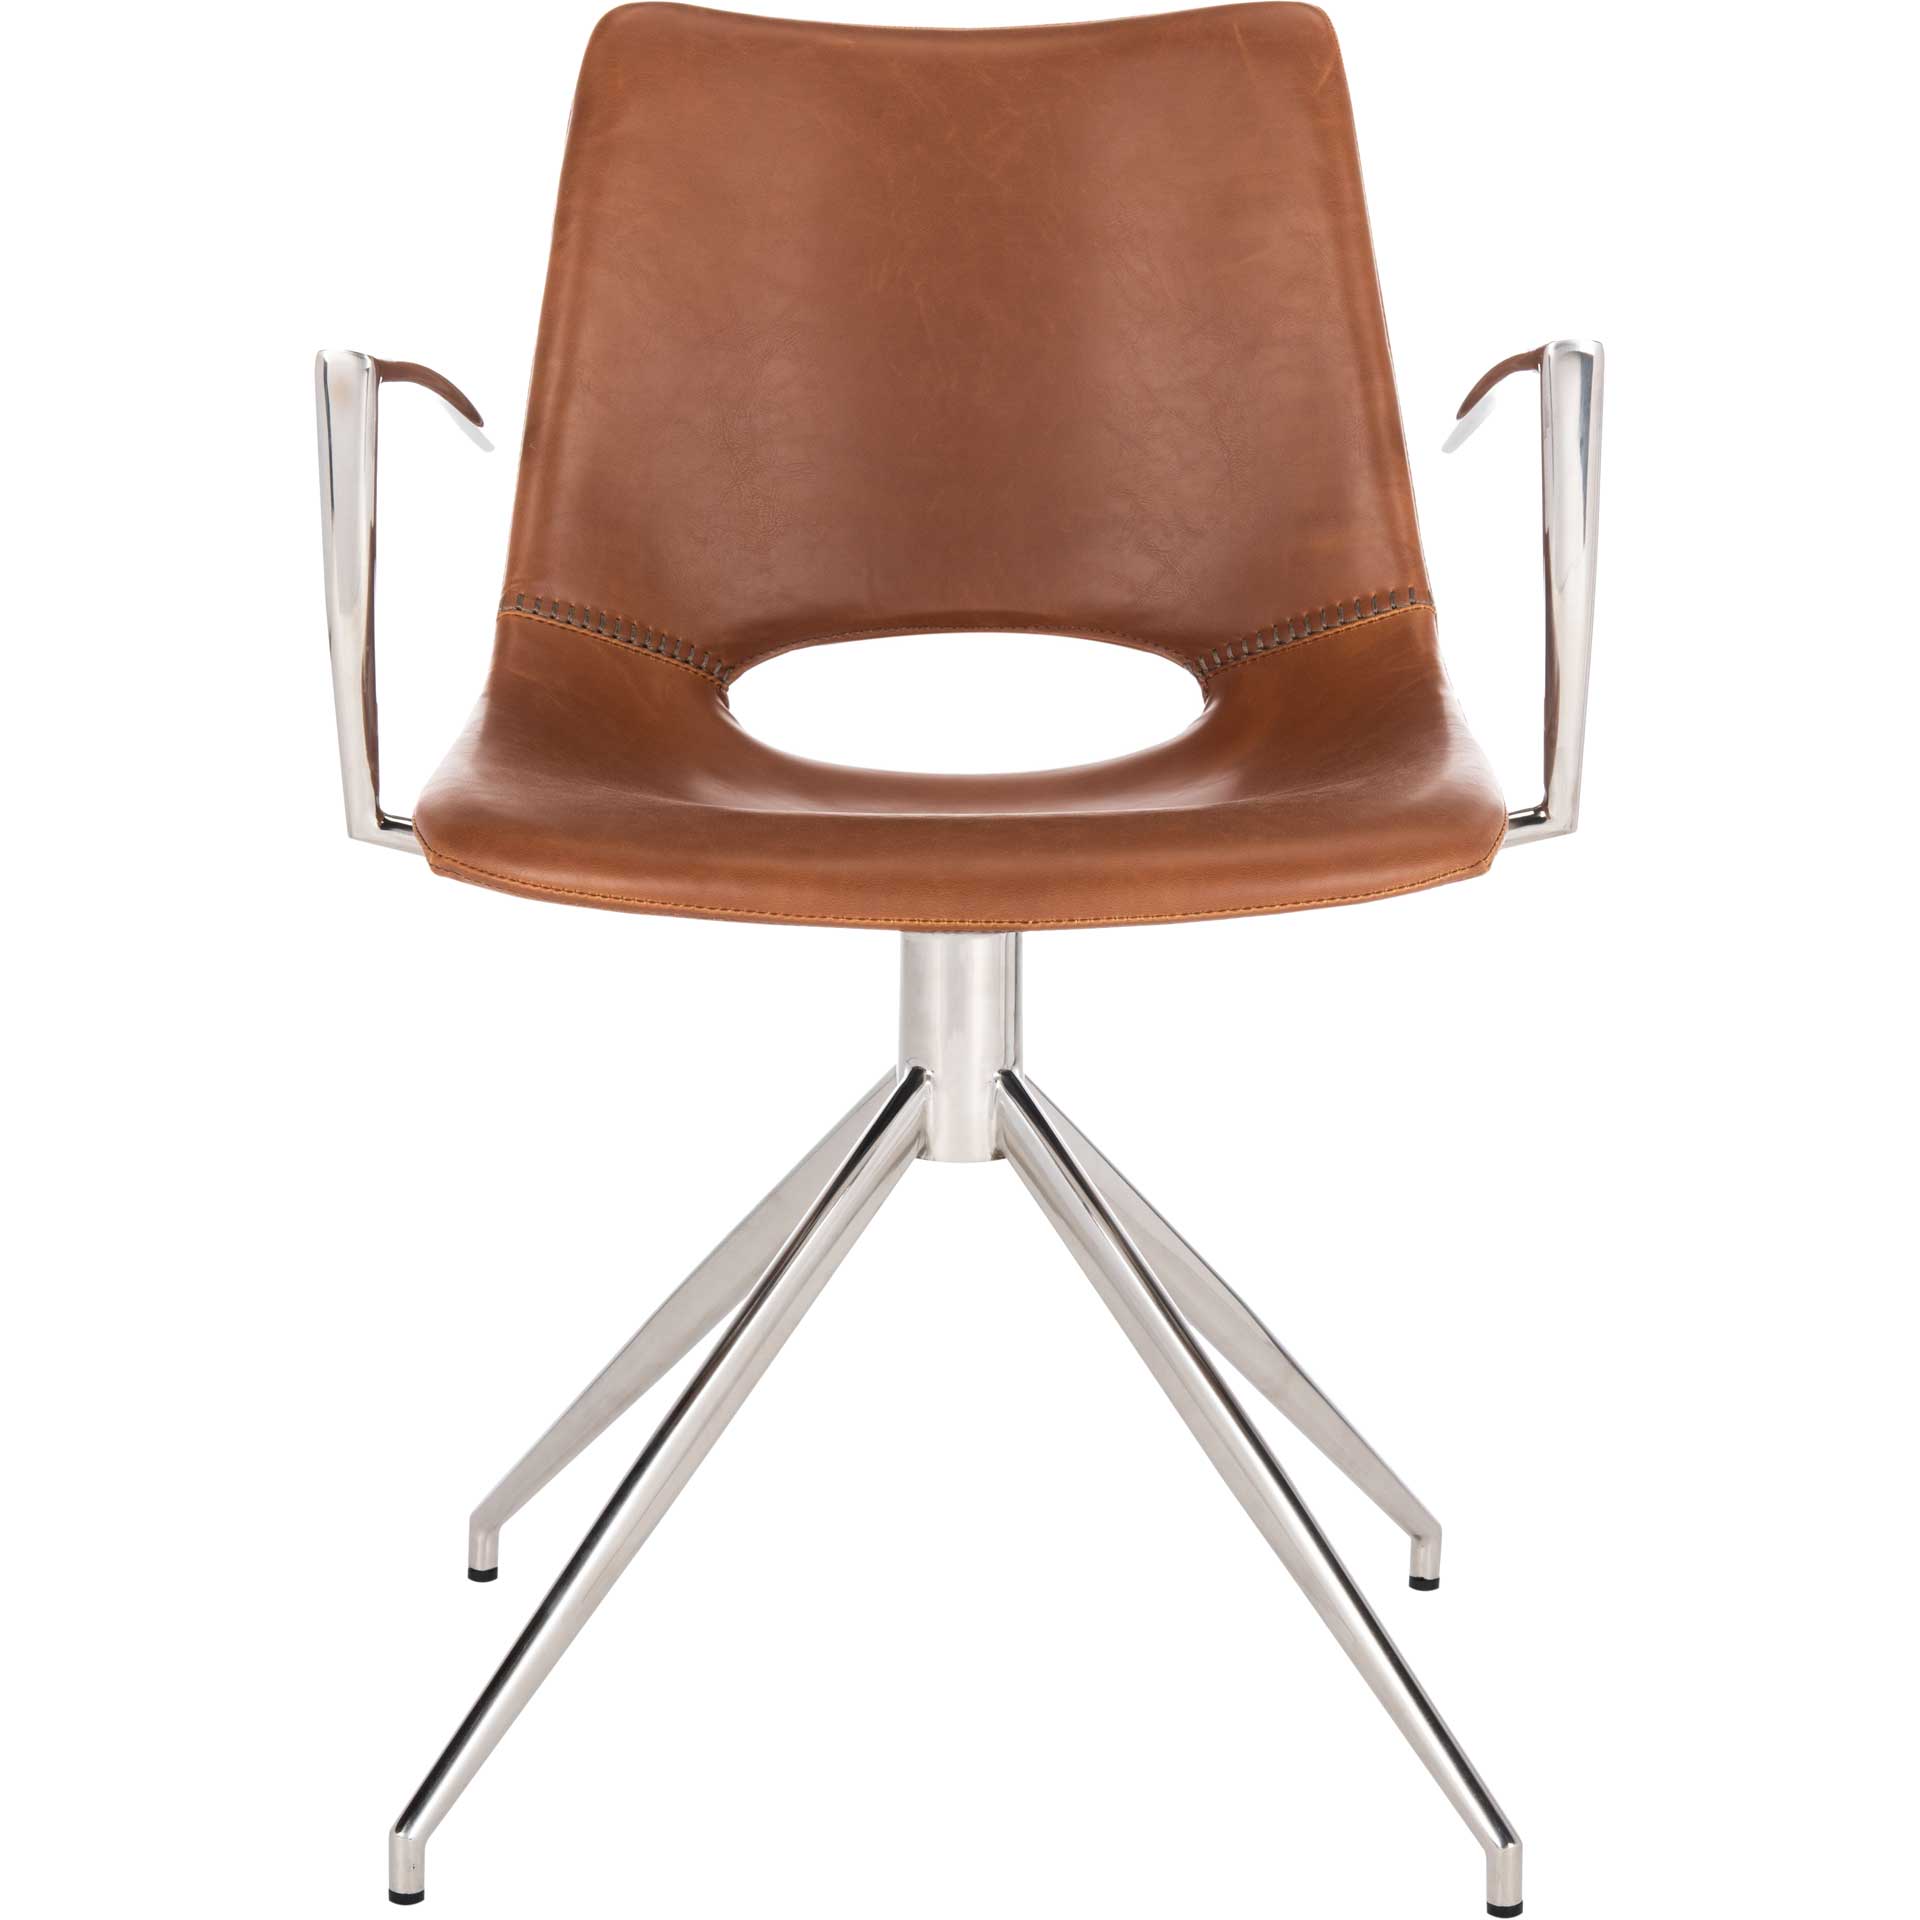 Dalton Leather Swivel Arm Chair Light Brown/Silver